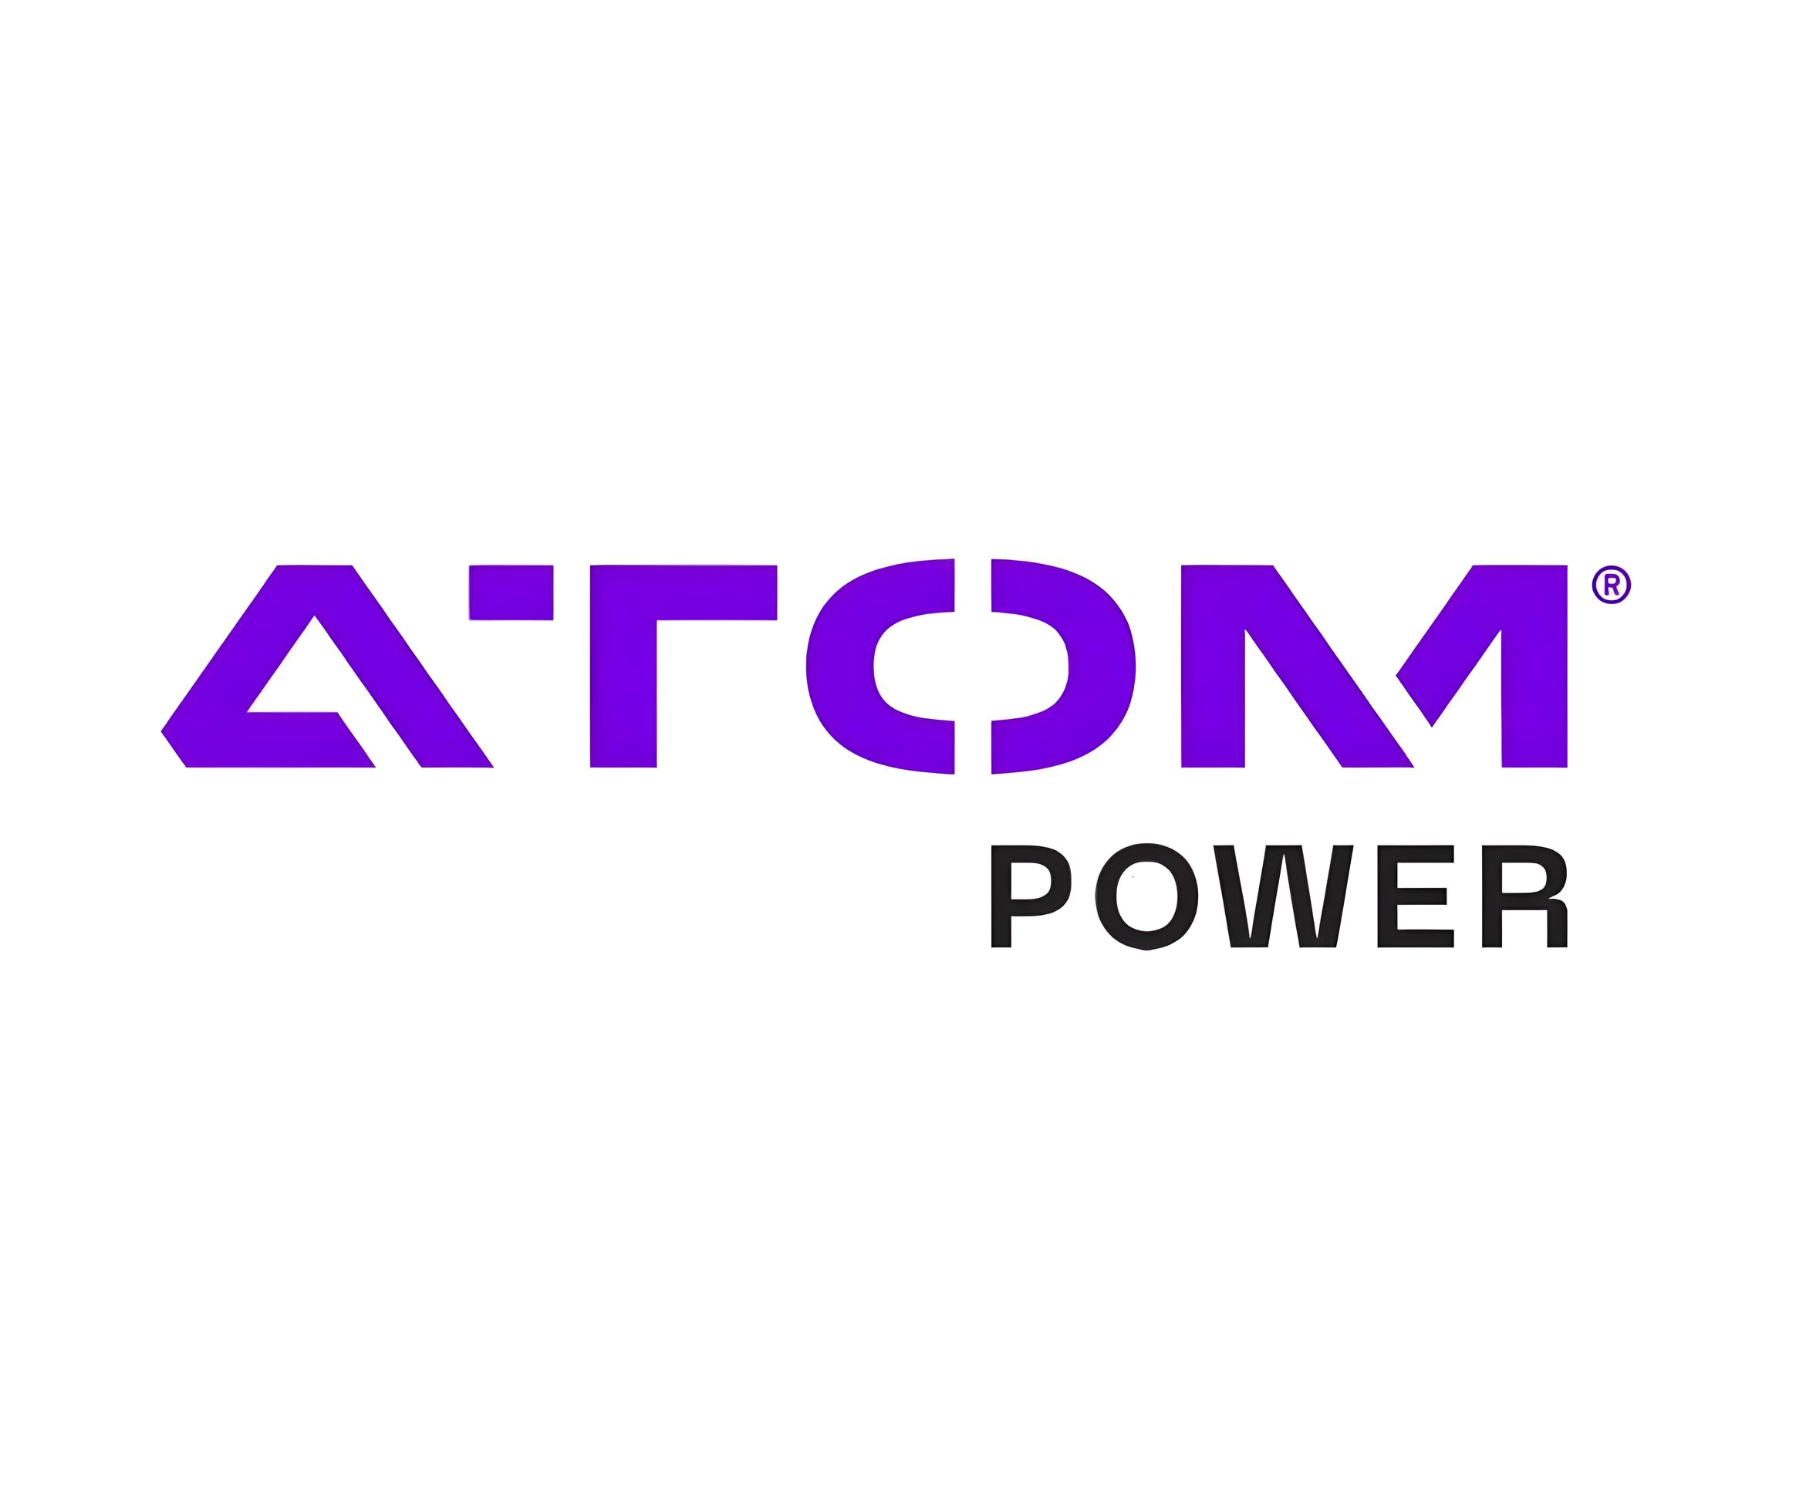 Atom Power logo.jpg